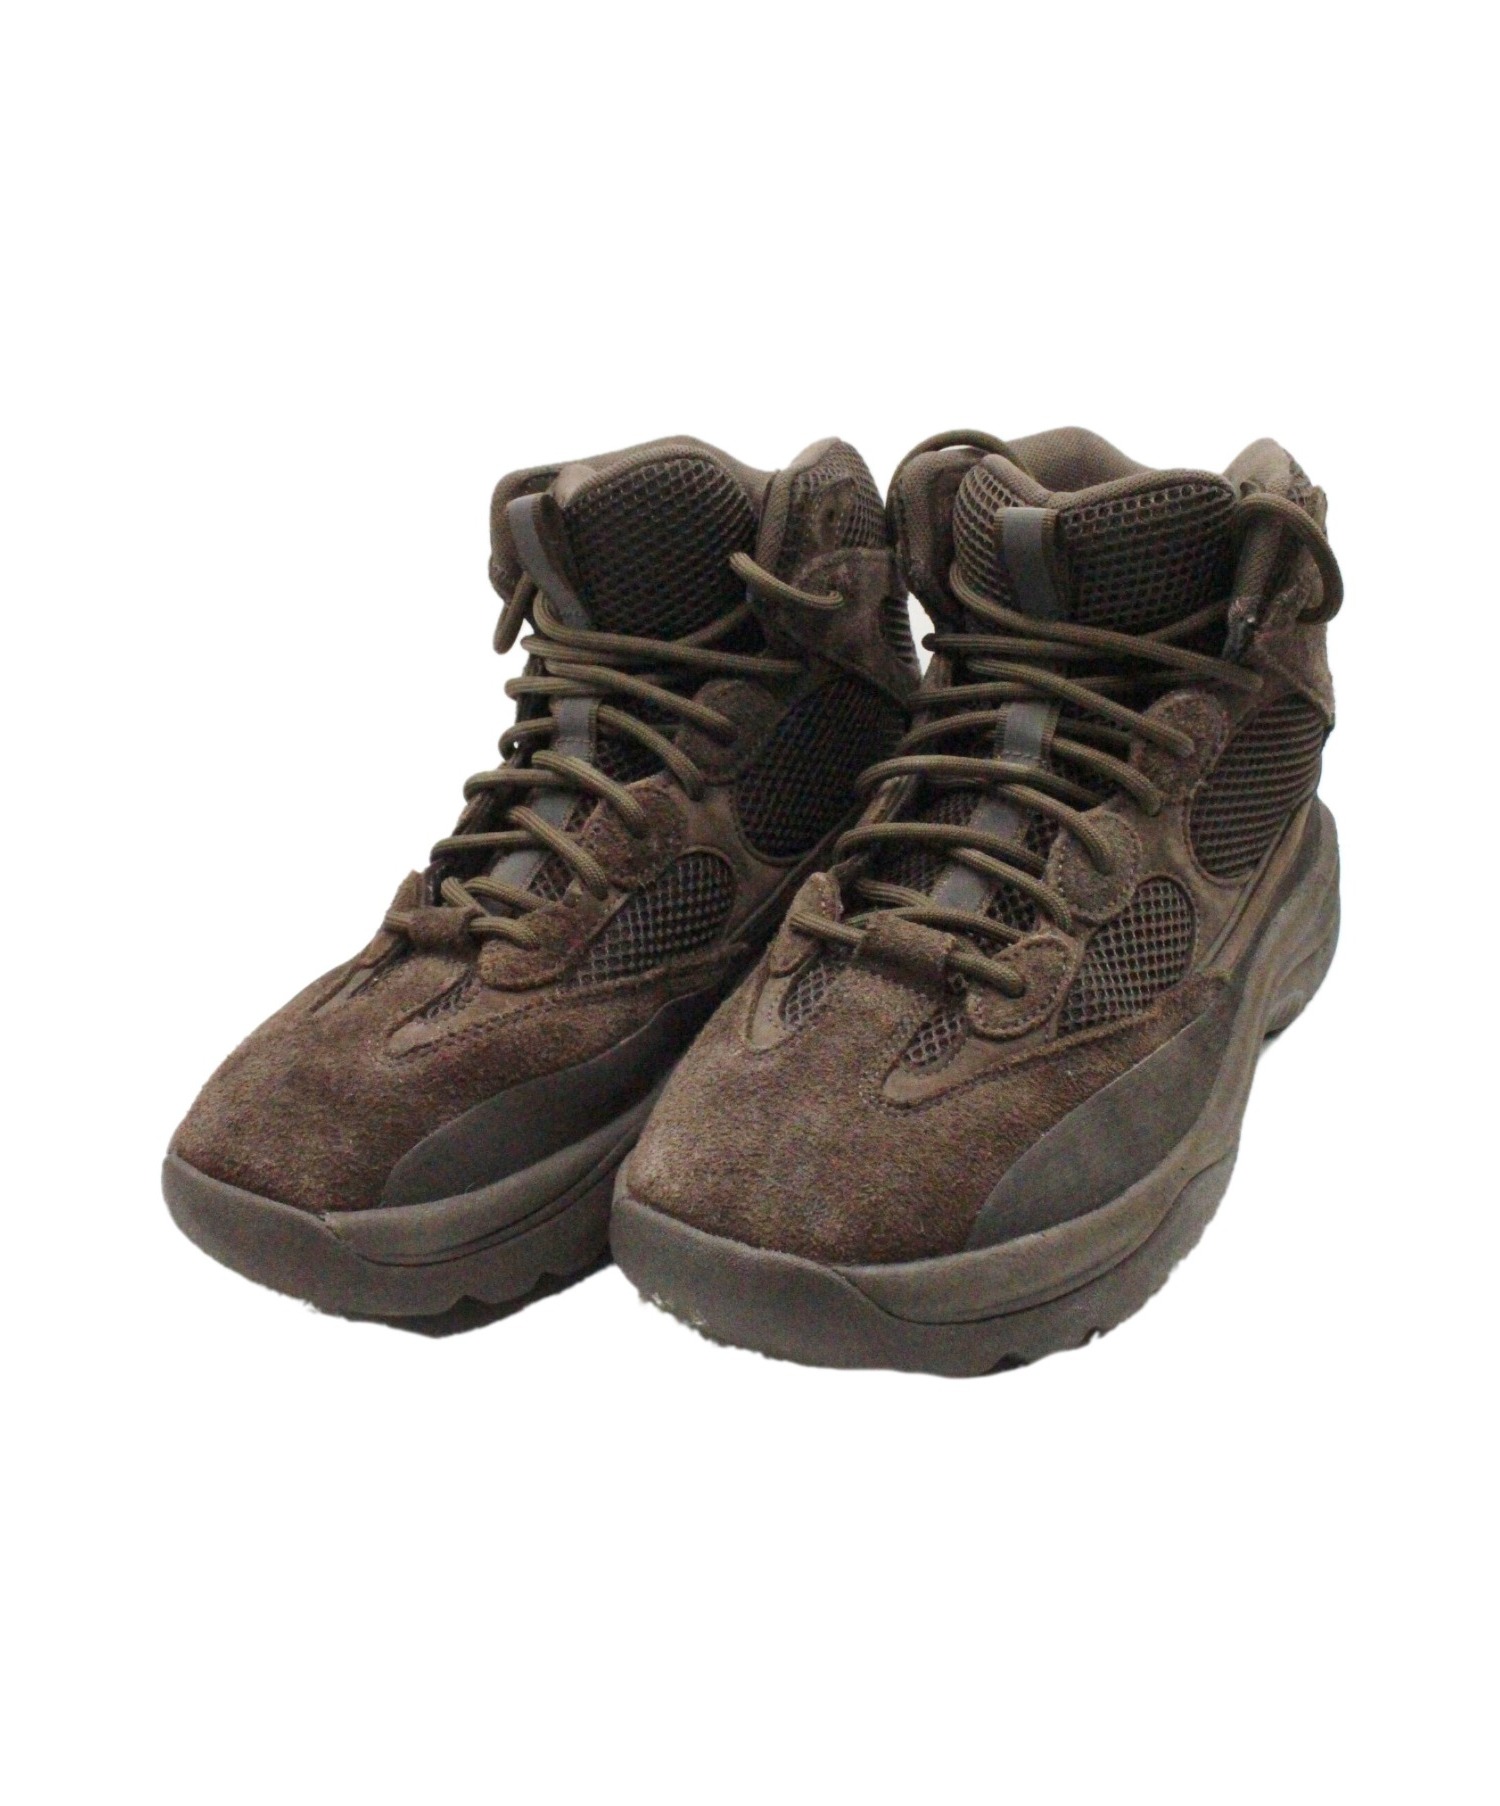 【未使用】yeezy desert boots 24.0cm